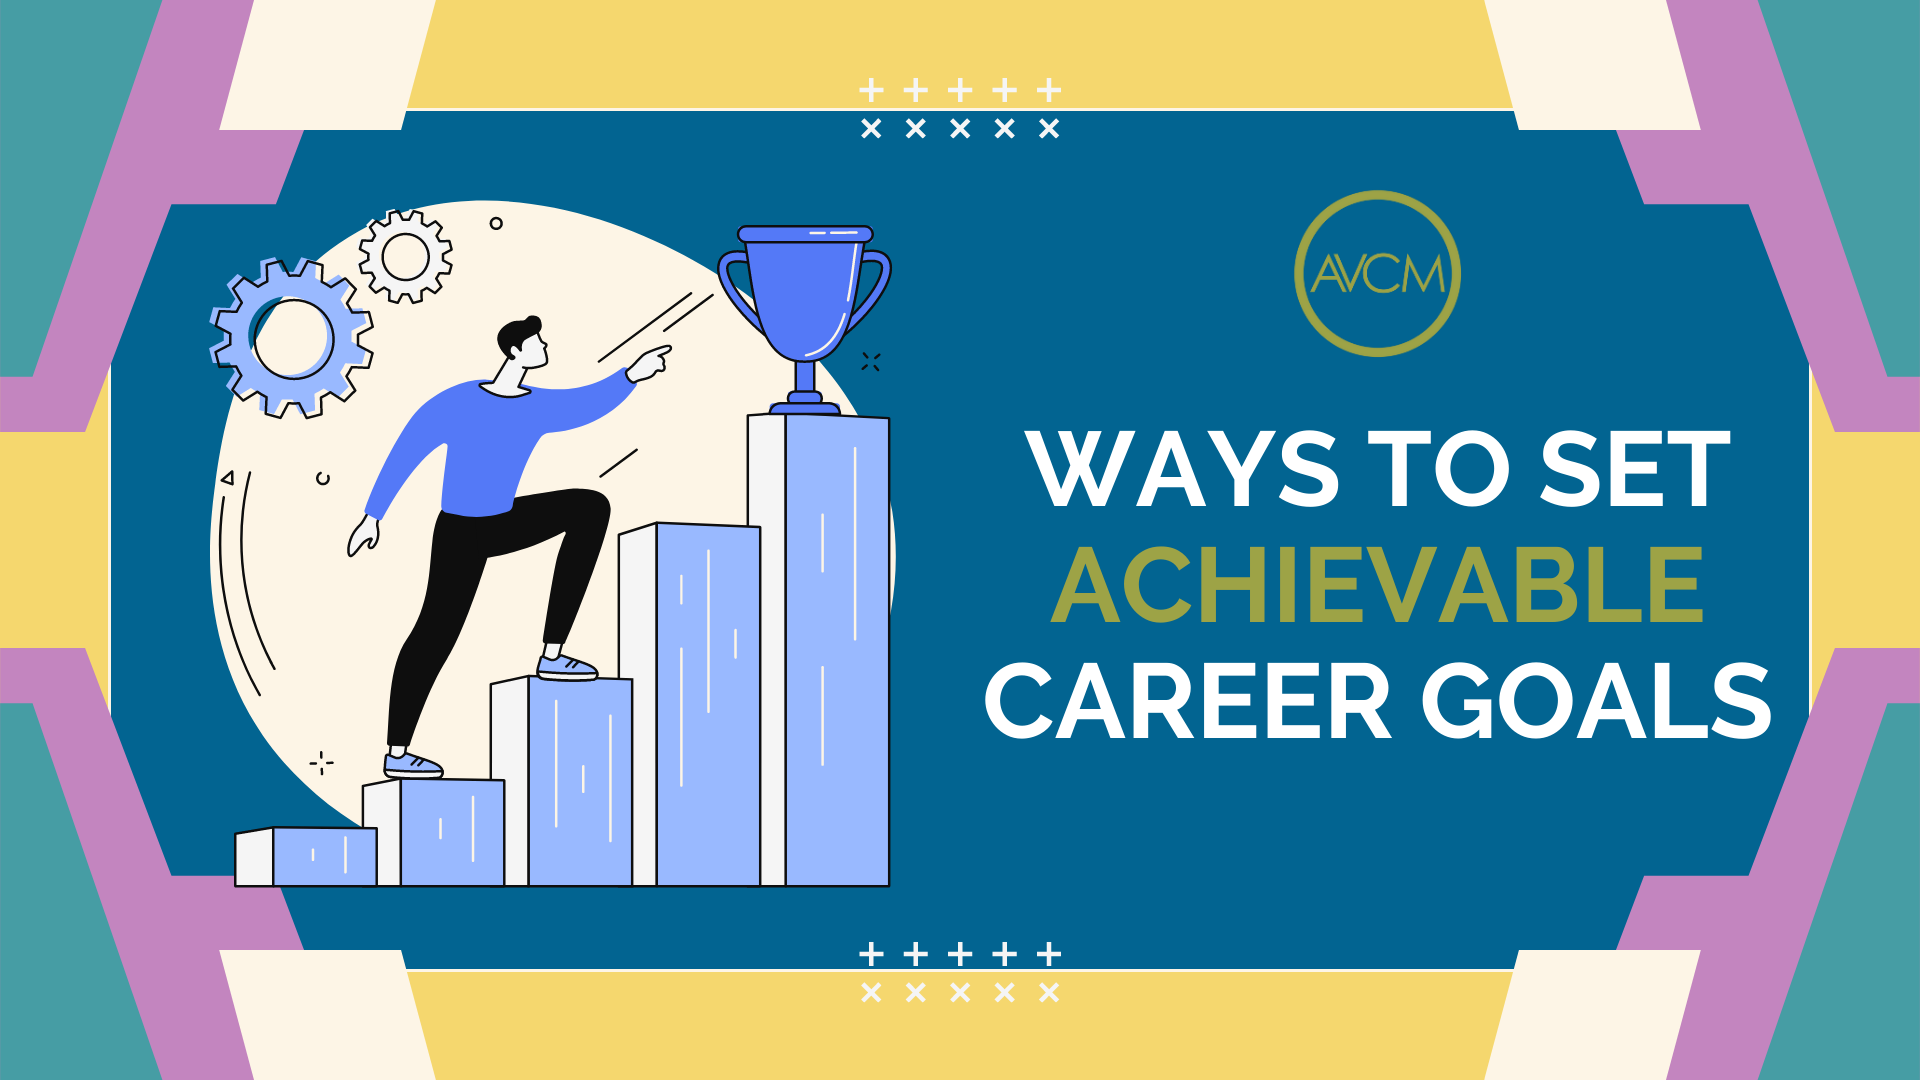 Ways to set ACHIEVABLE Career Goals - Ways to set ACHIEVABLE Career Goals